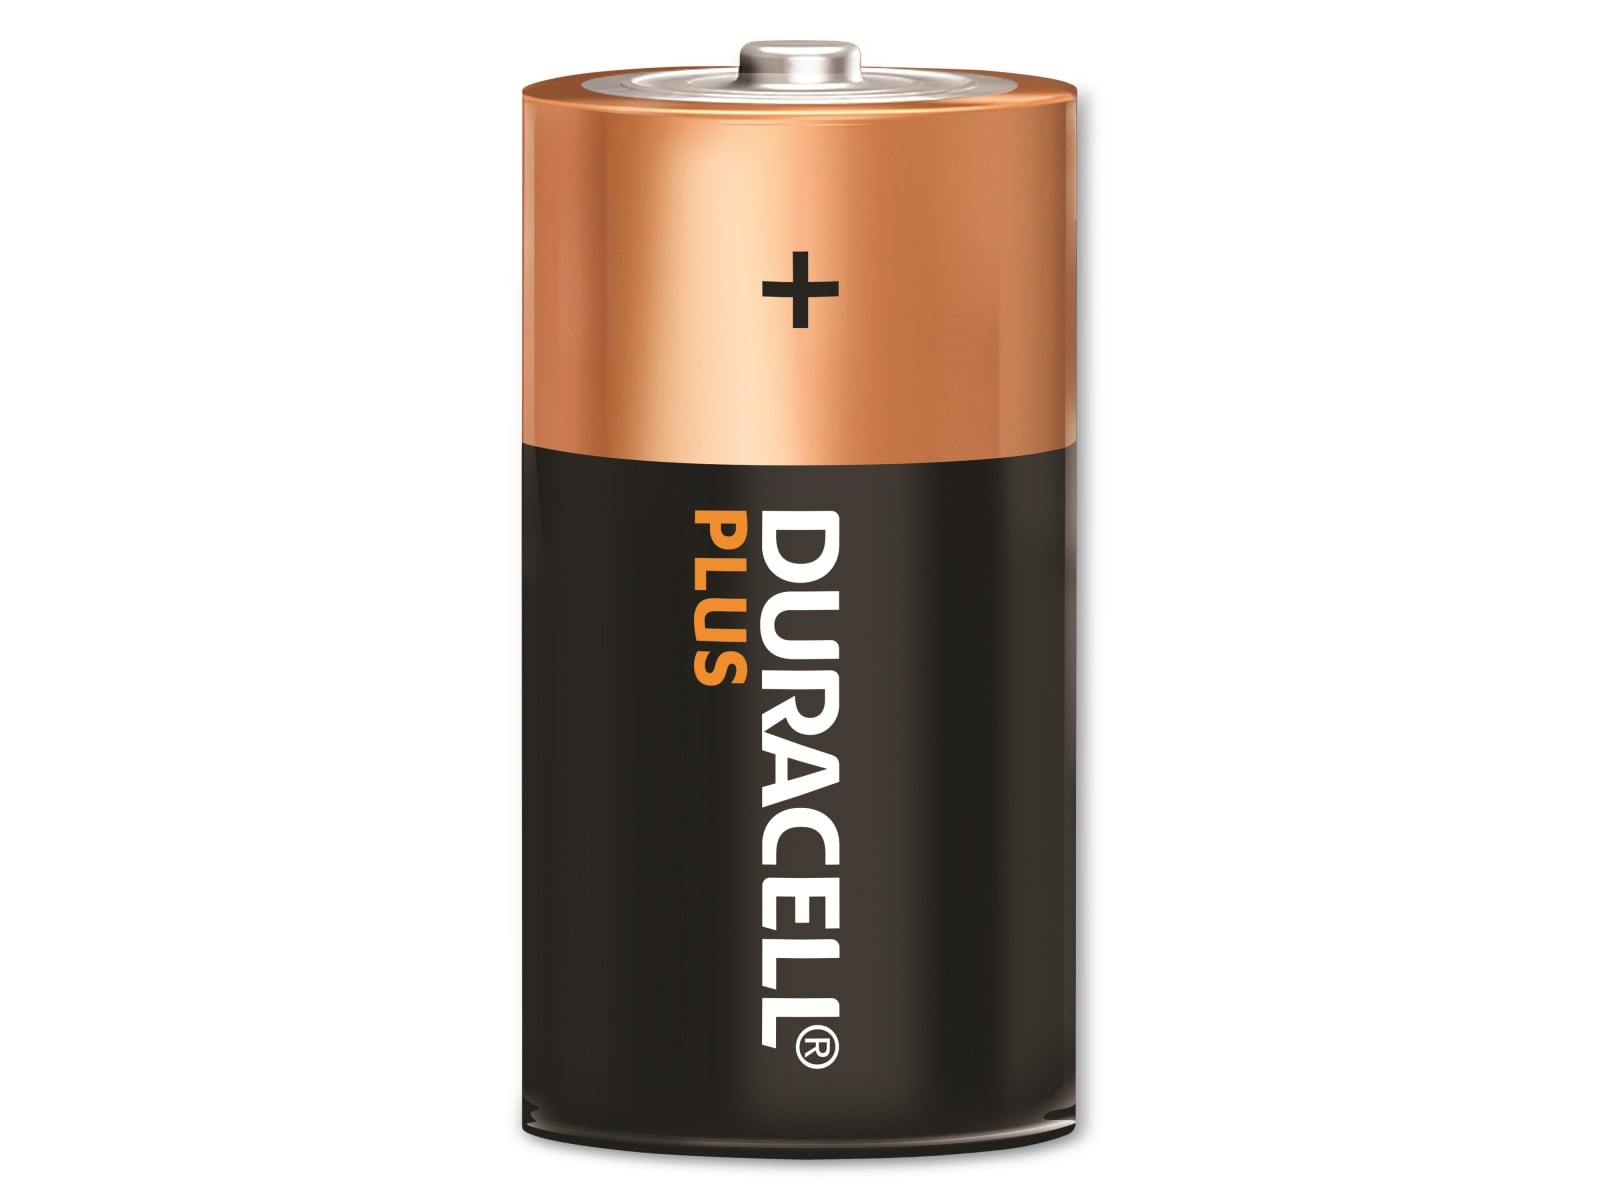 DURACELL Alkaline-Baby-Batterie LR14, 1.5V, Plus, 4 Stück